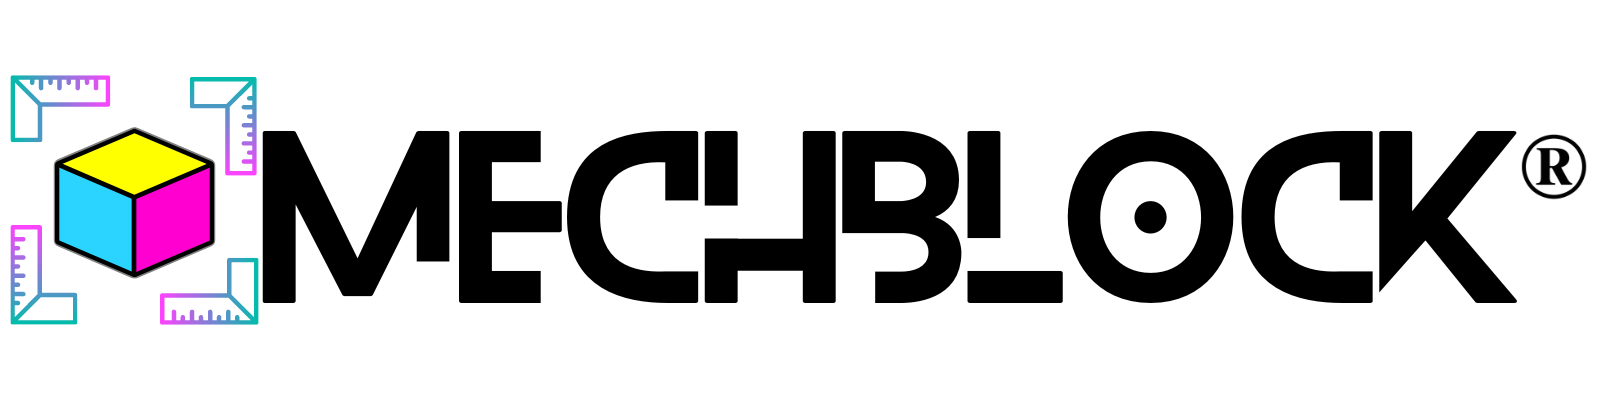 mechblock logo trademark b png